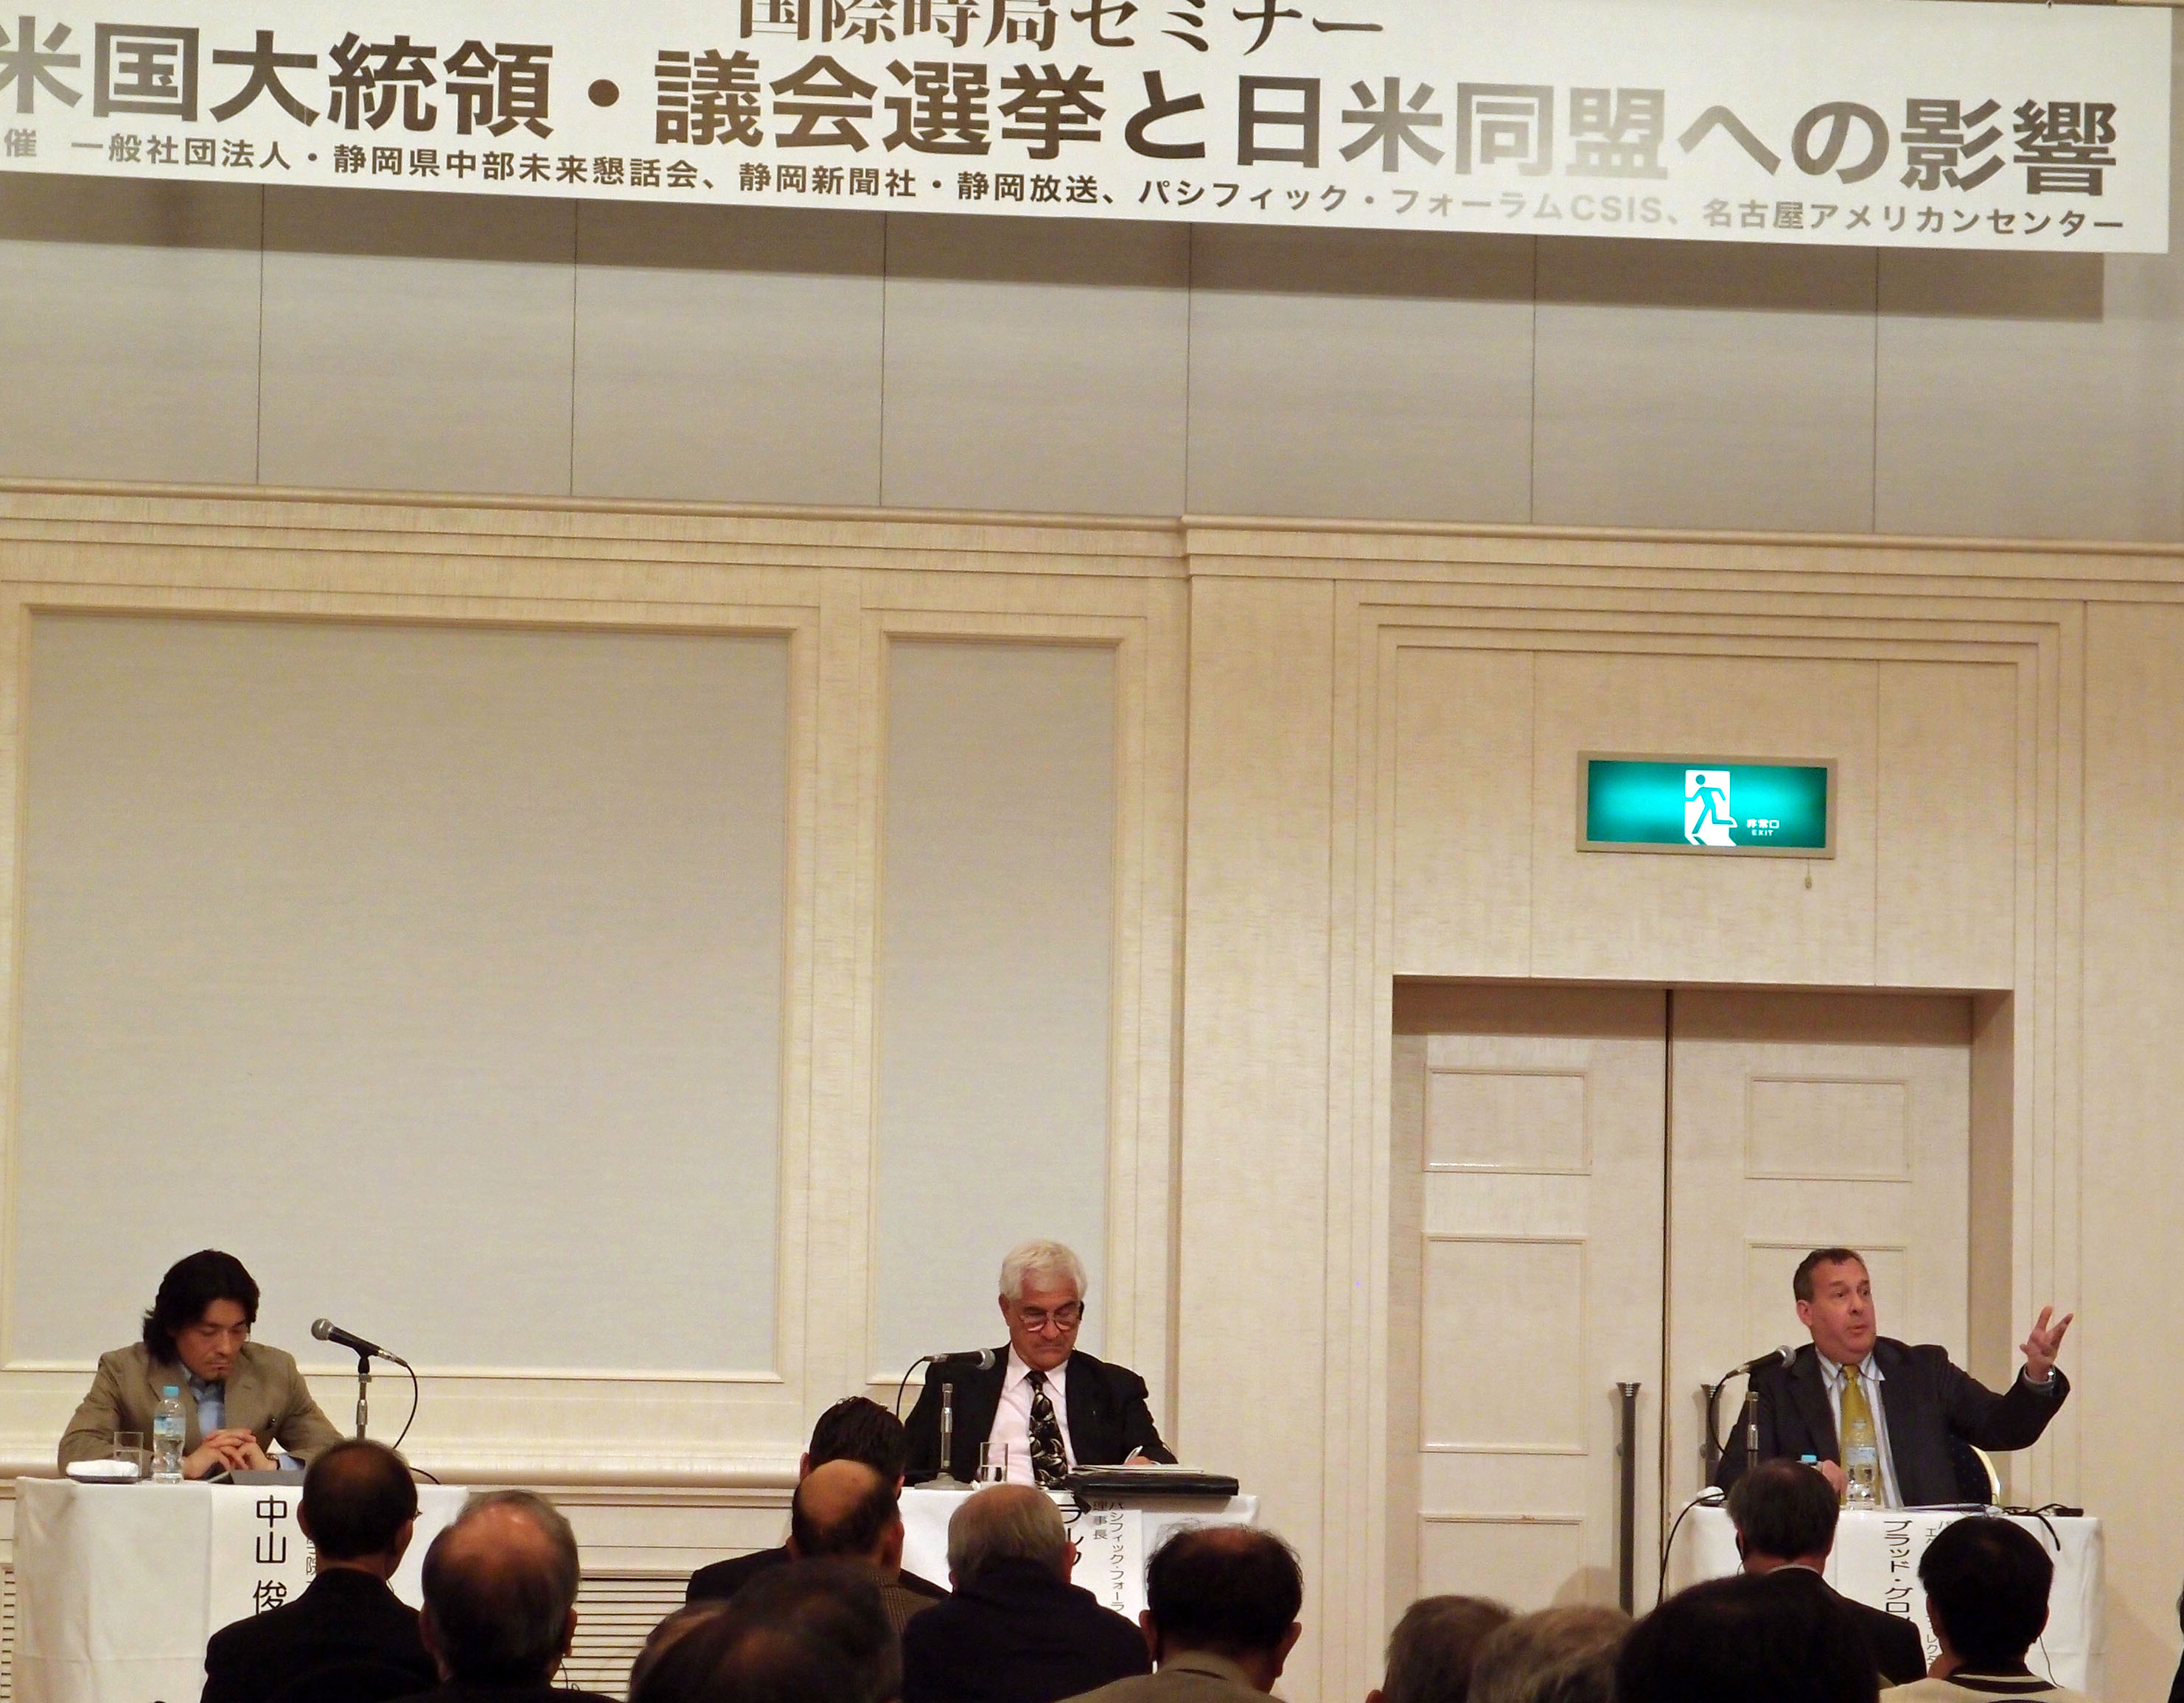 Pacific Forum Seminar in Shizuoka